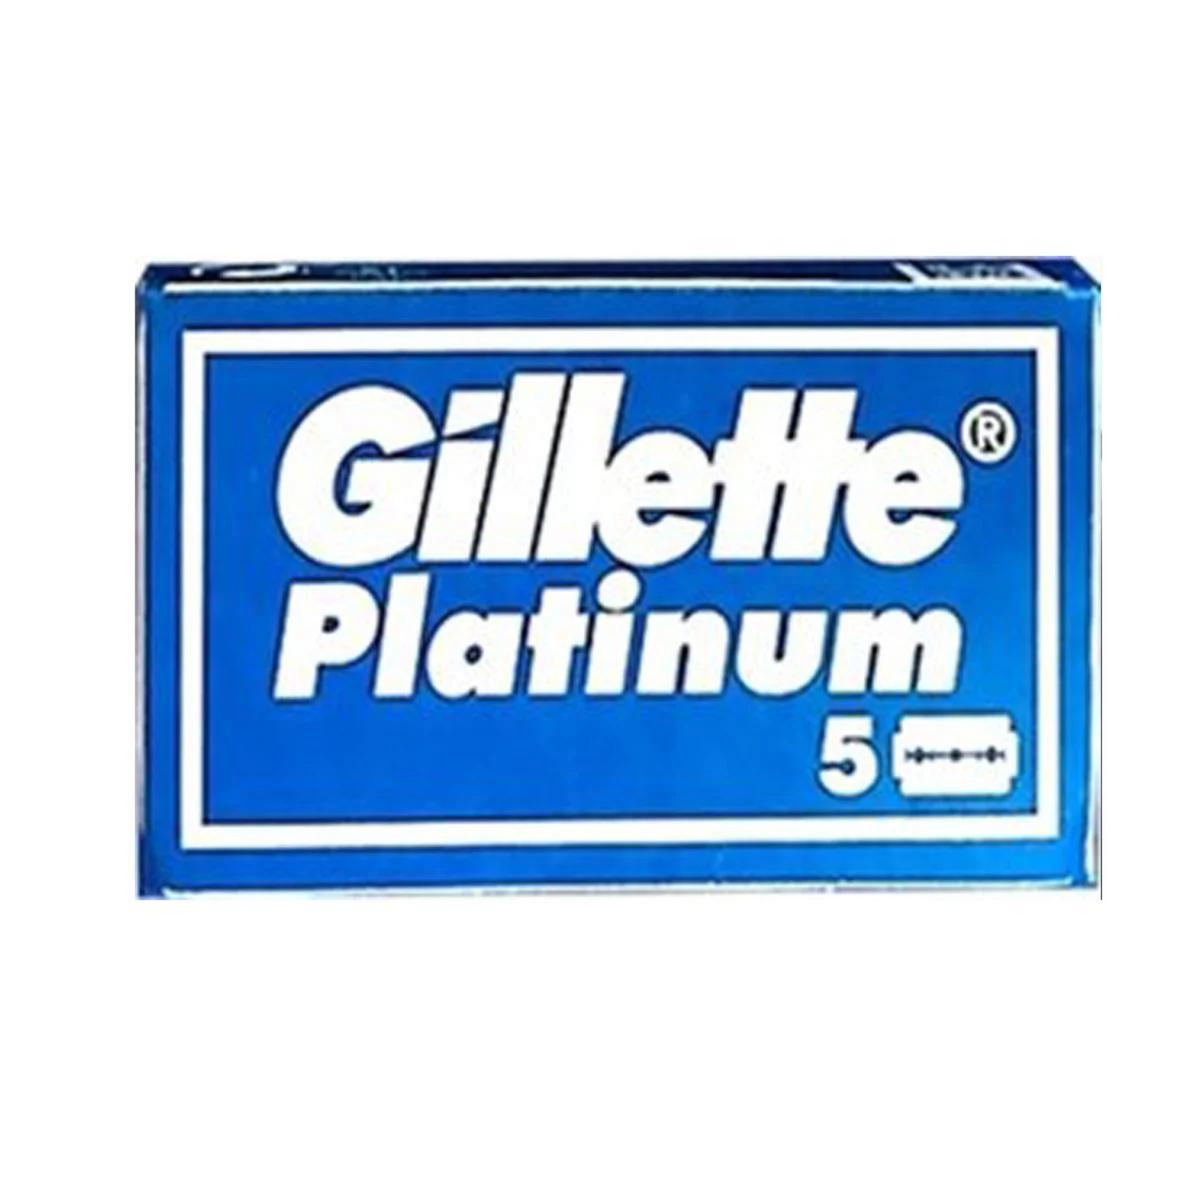 Primary Image of Gillette Platinum Classic Double Edge Razor Blades (5 Count)